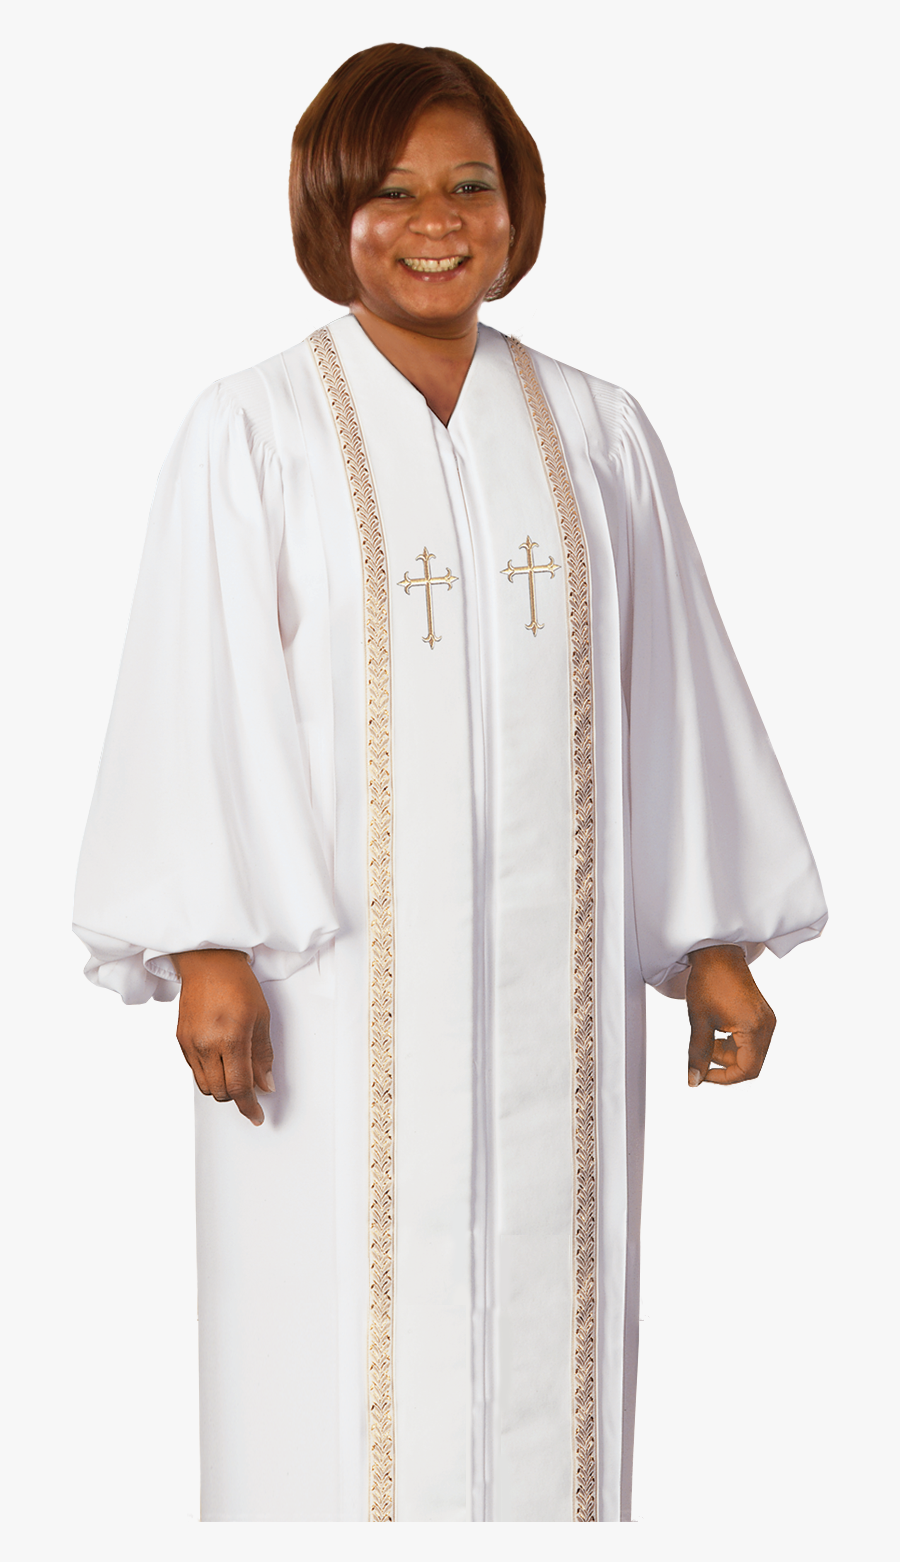 Clip Art Women S White Robe - White Clergy Robes For Women, Transparent Clipart